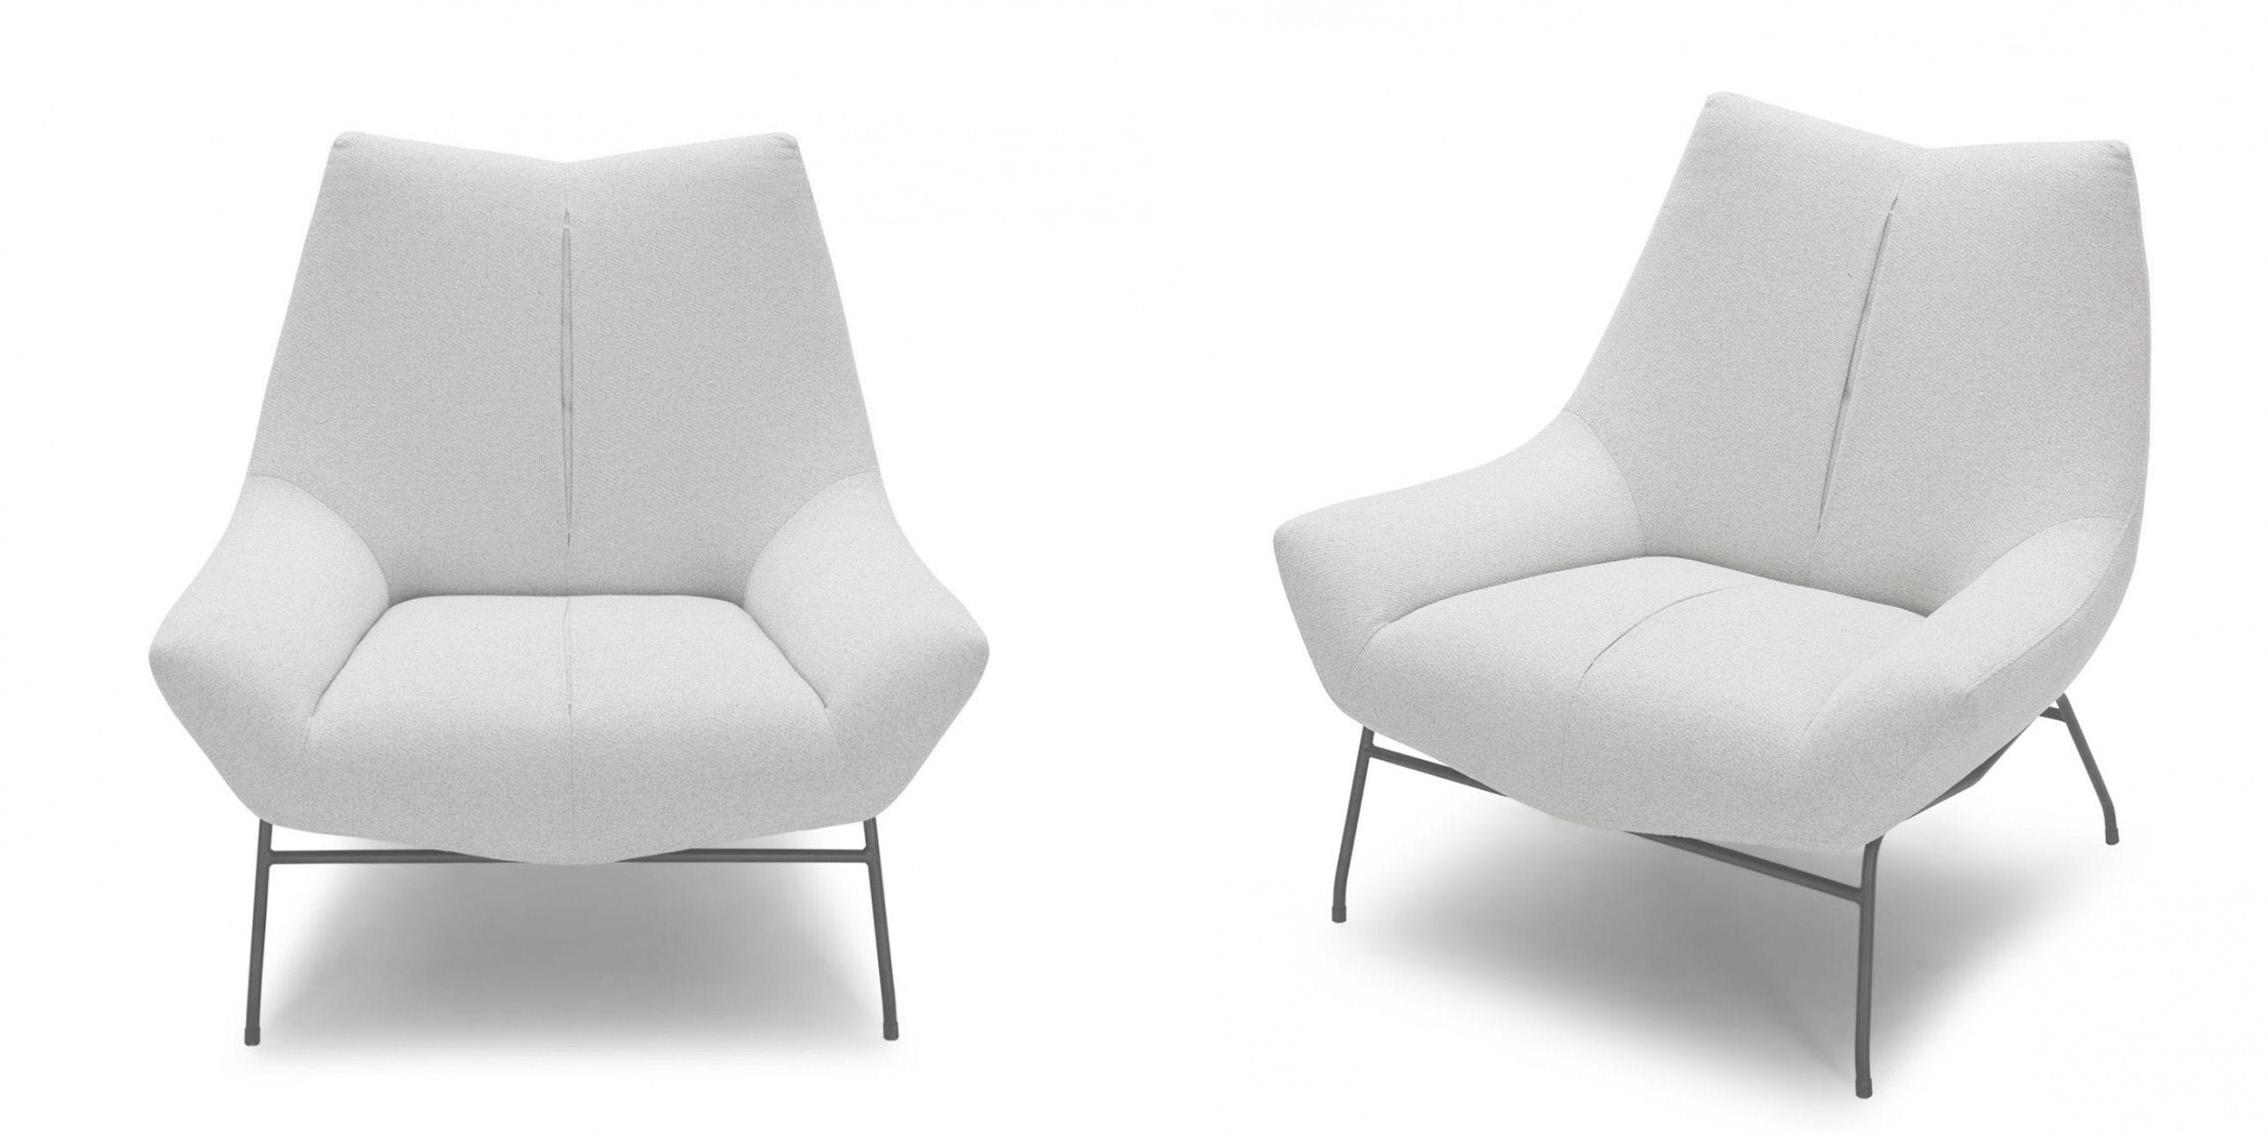 Contemporary, Modern Lounge Chair Set VGKKA1018-WHT-CH-Set-2 VGKKA1018-WHT-CH-Set-2 in White Fabric